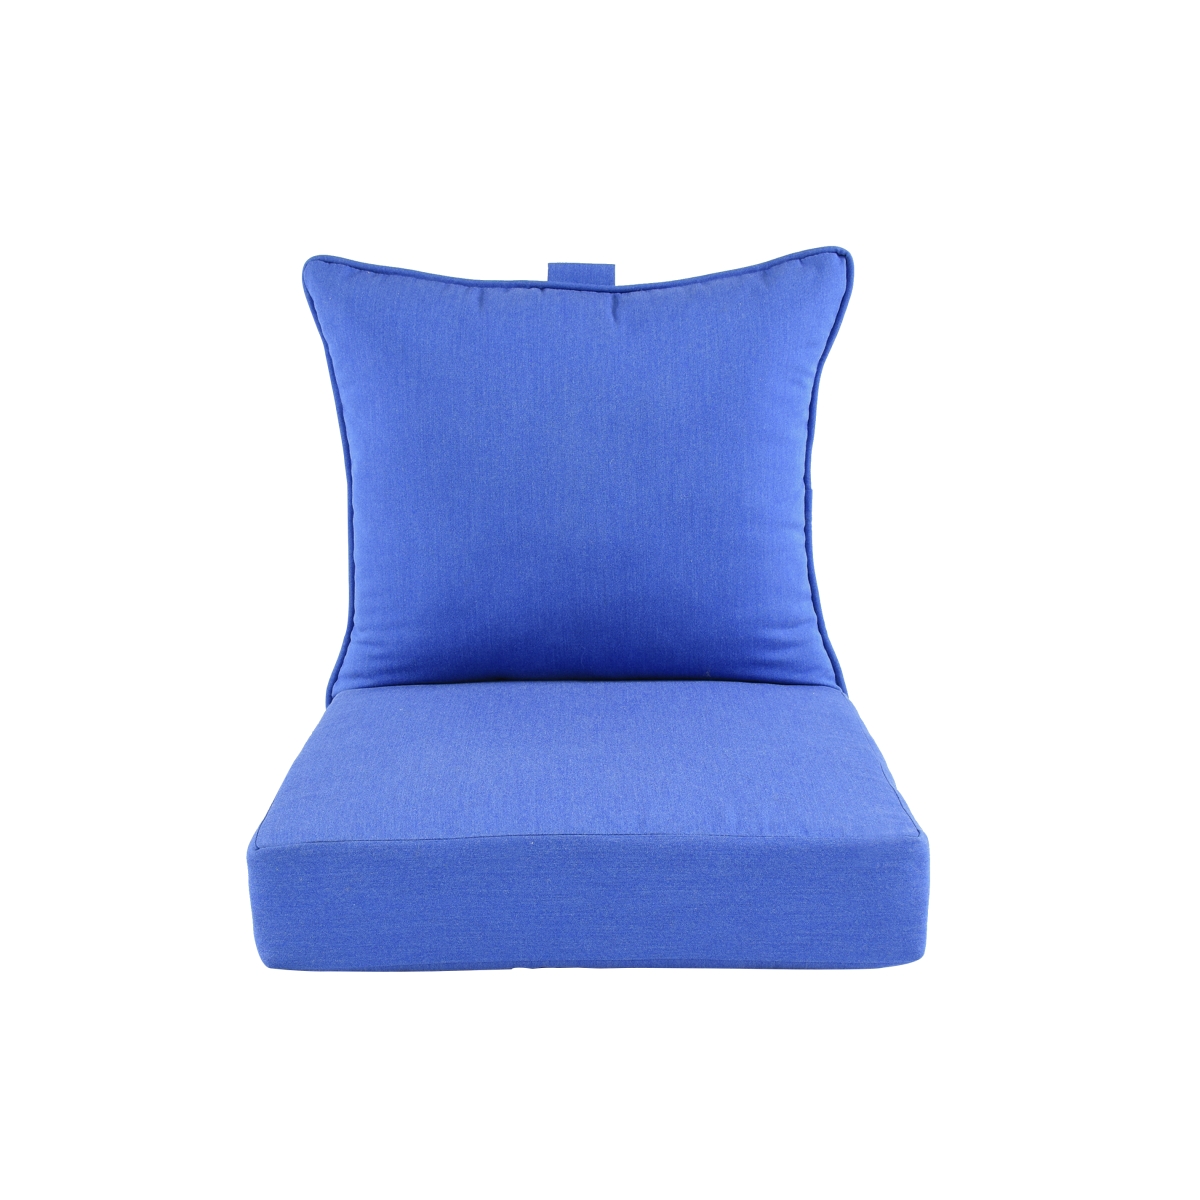 Cuds46-sda93 46.5 X 24 In. Pacifica Premium Deep Seat Lounge Cushion In Lapis